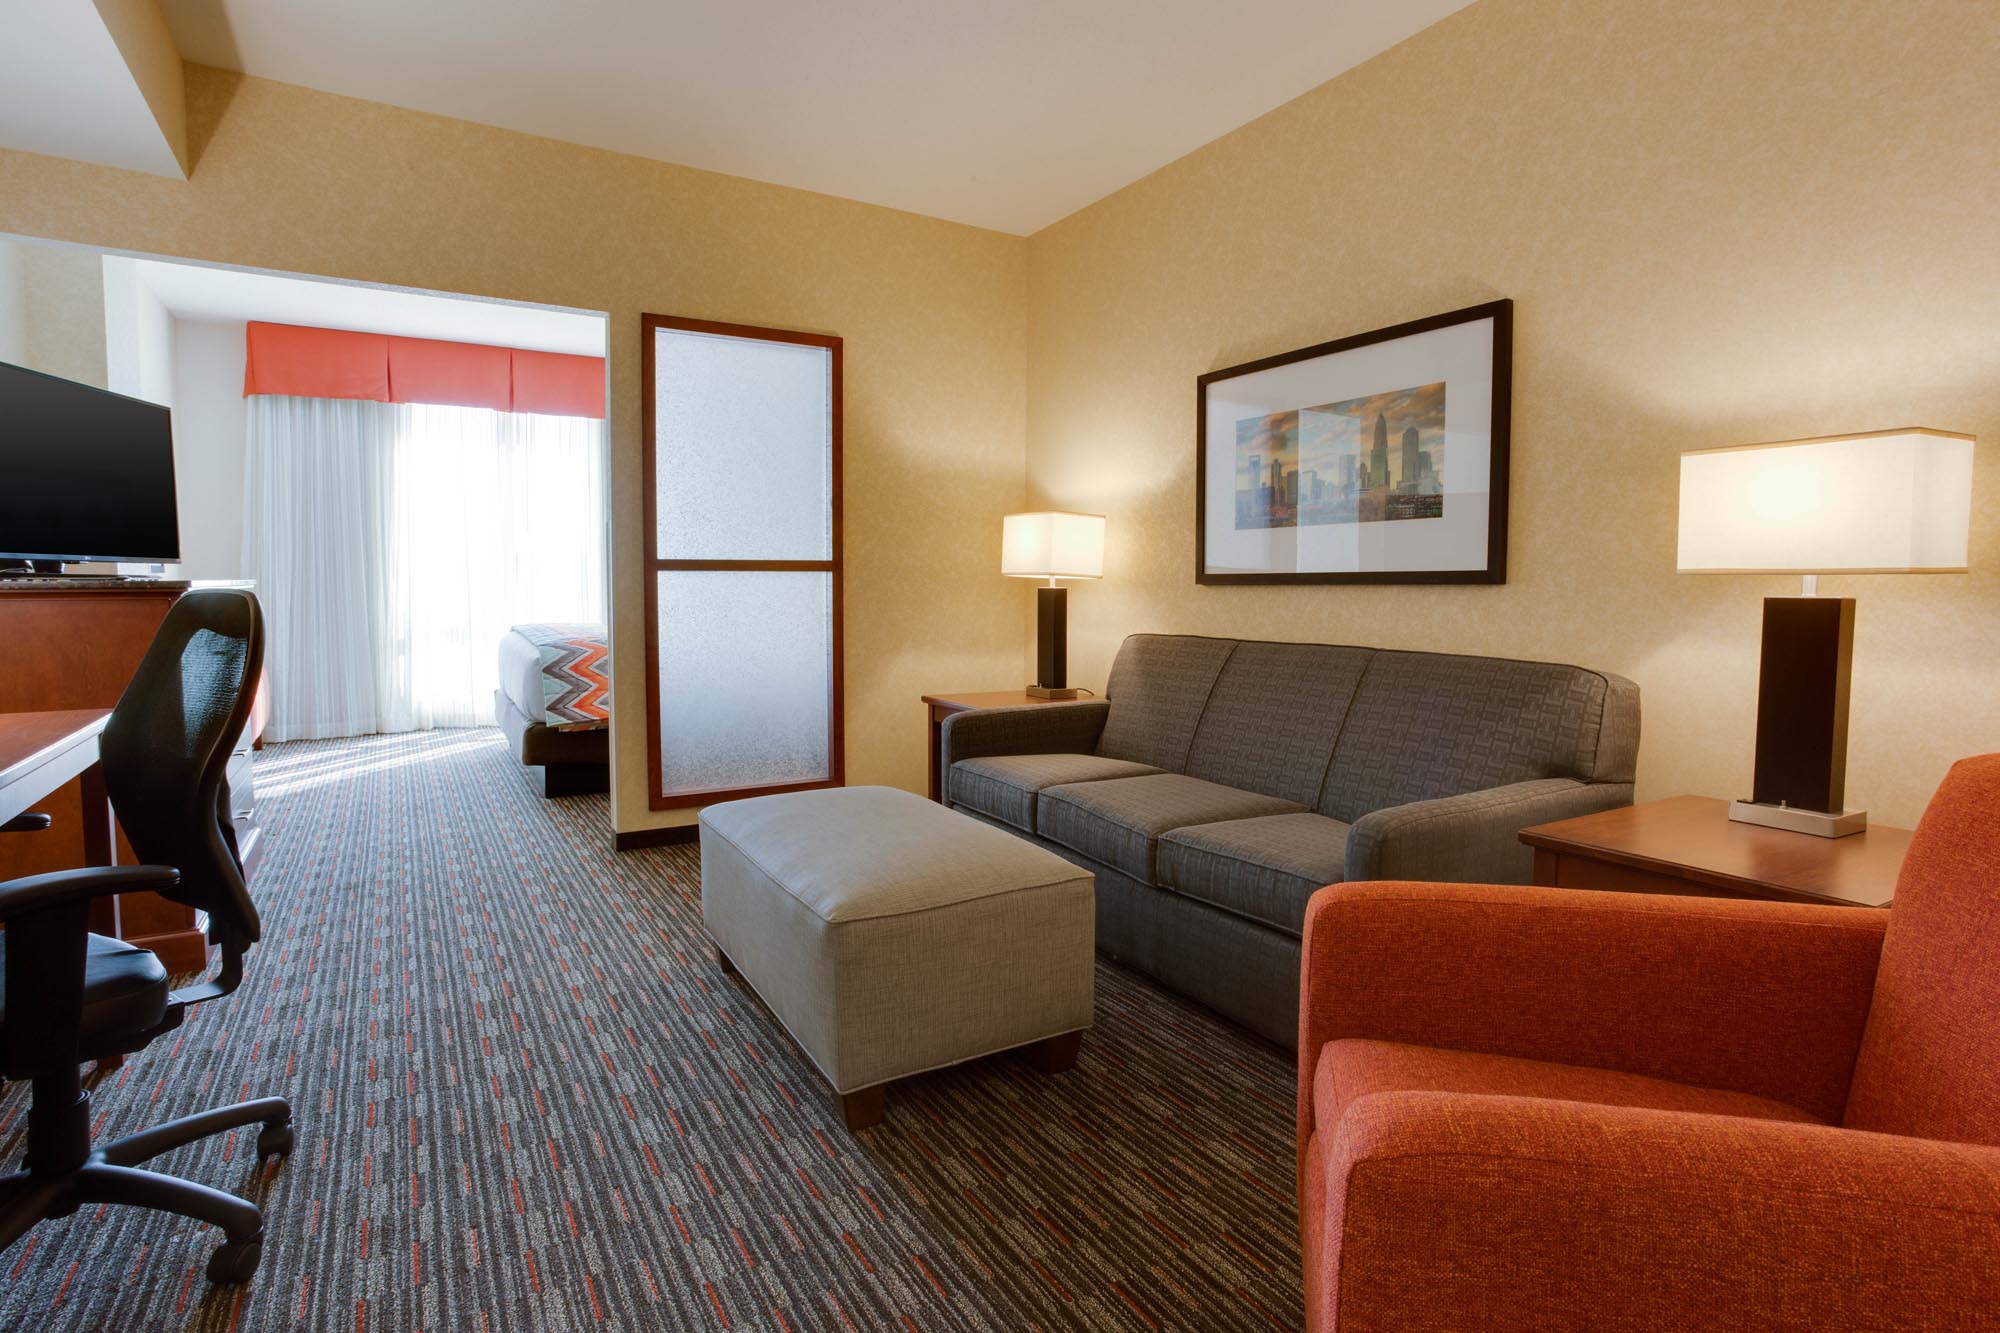 Drury Inn & Suites Charlotte Northlake - Drury Hotels